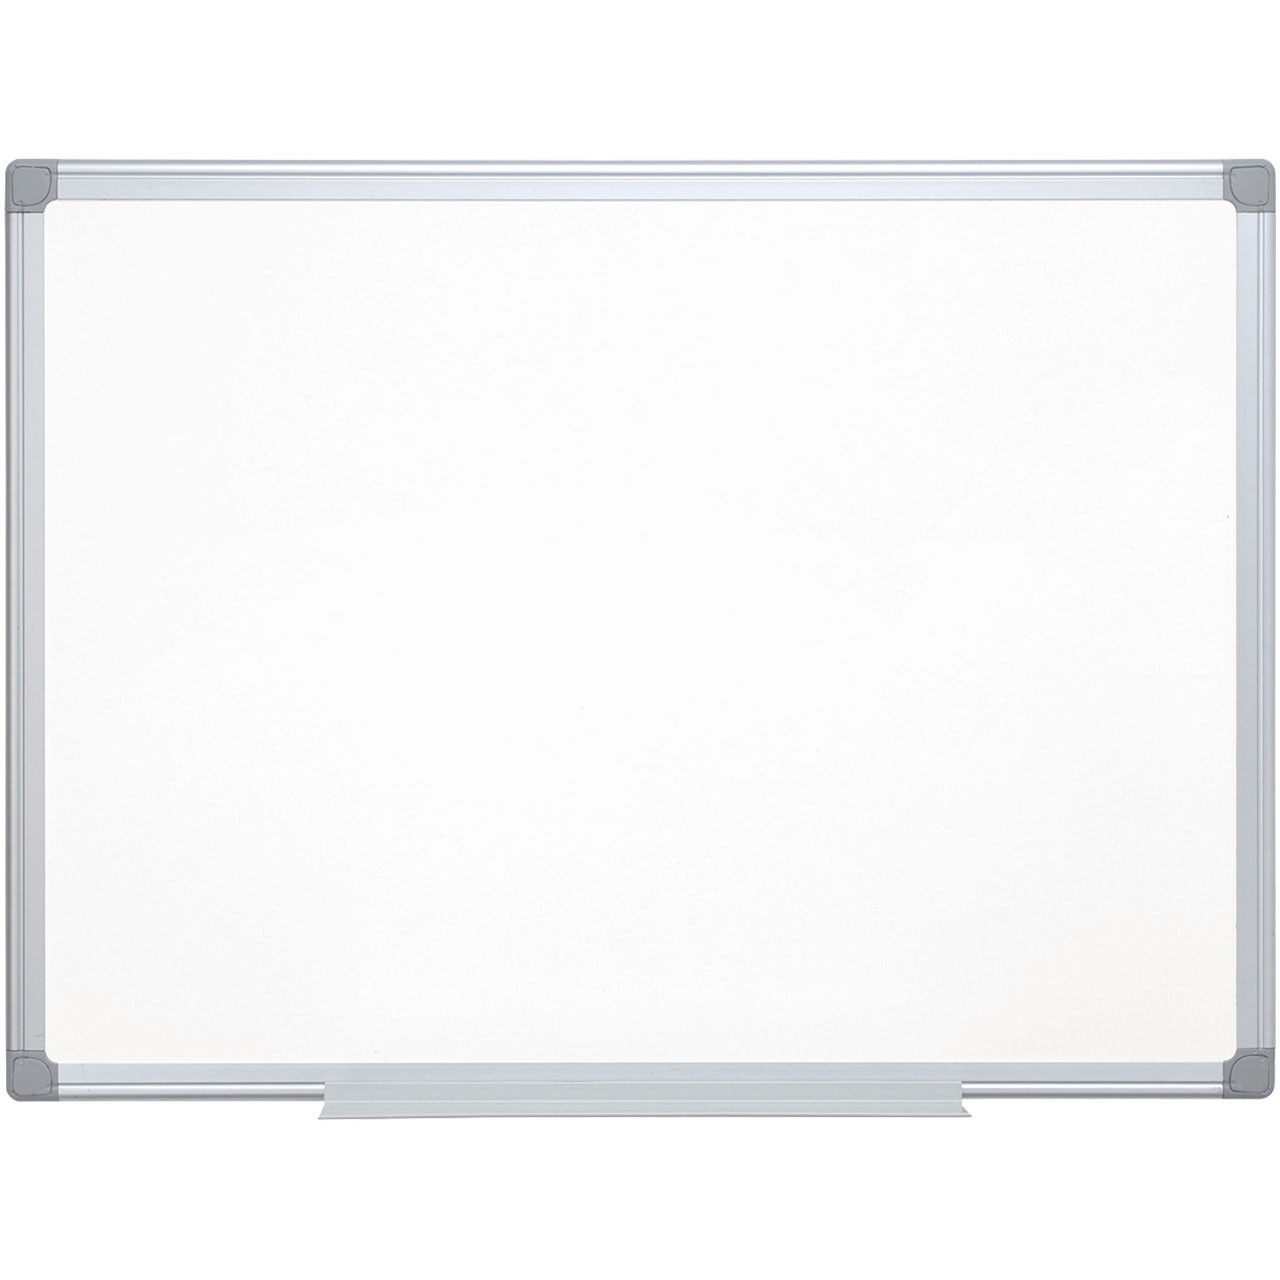 Q-connect emaljeret whiteboardtavle 120x90cm